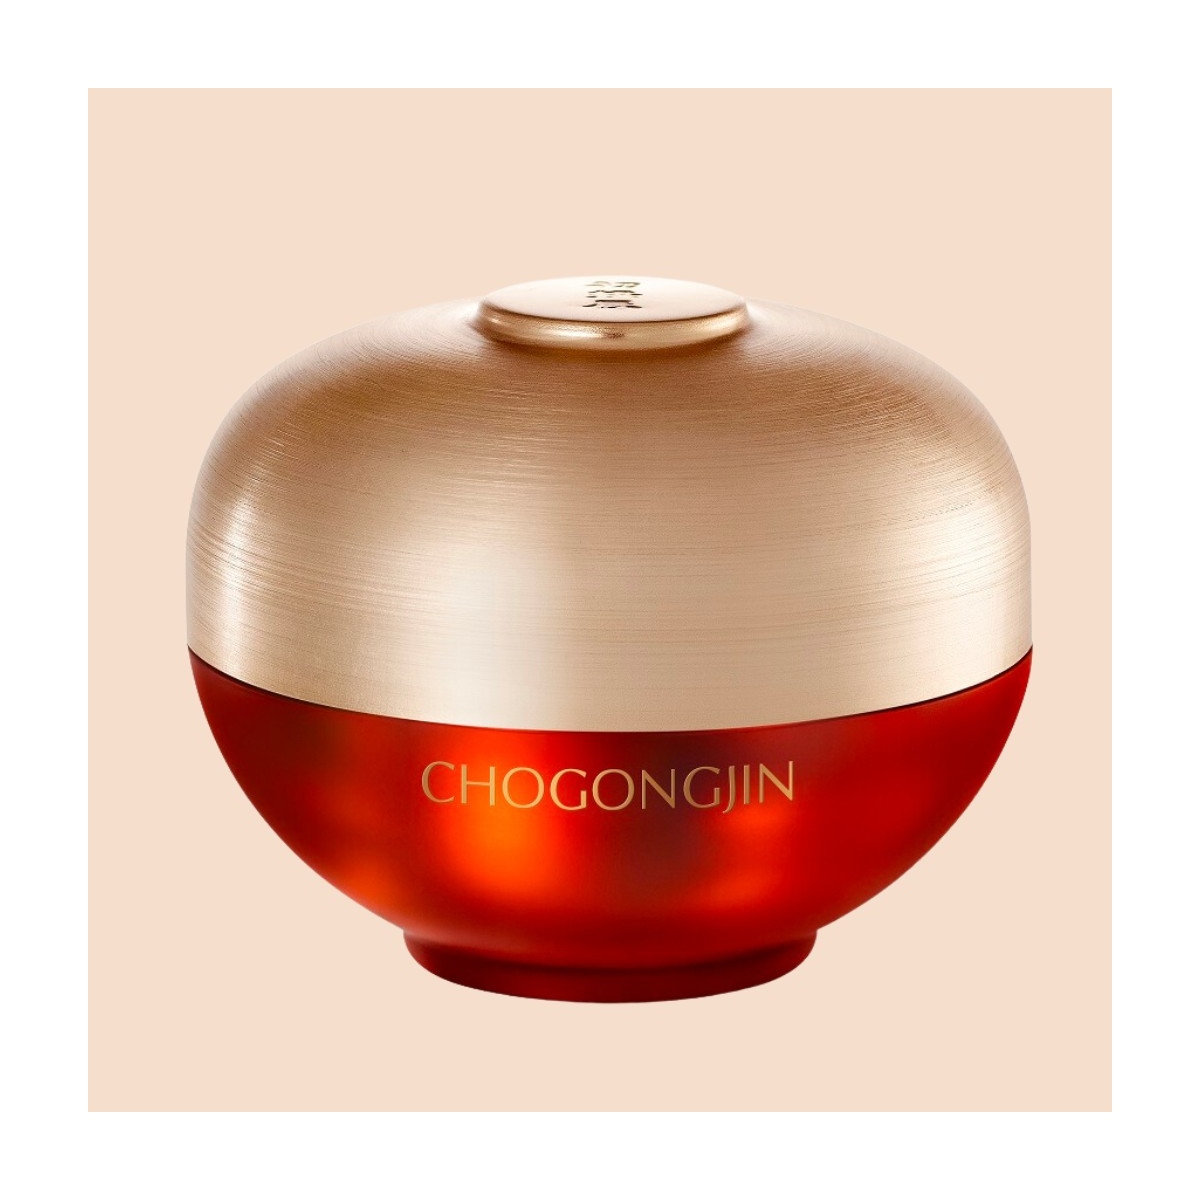 Emulsión al mejor precio: Missha Chogongjin Sosaeng Cream- Crema Anti Edad Premium de Missha en Skin Thinks - Piel Sensible